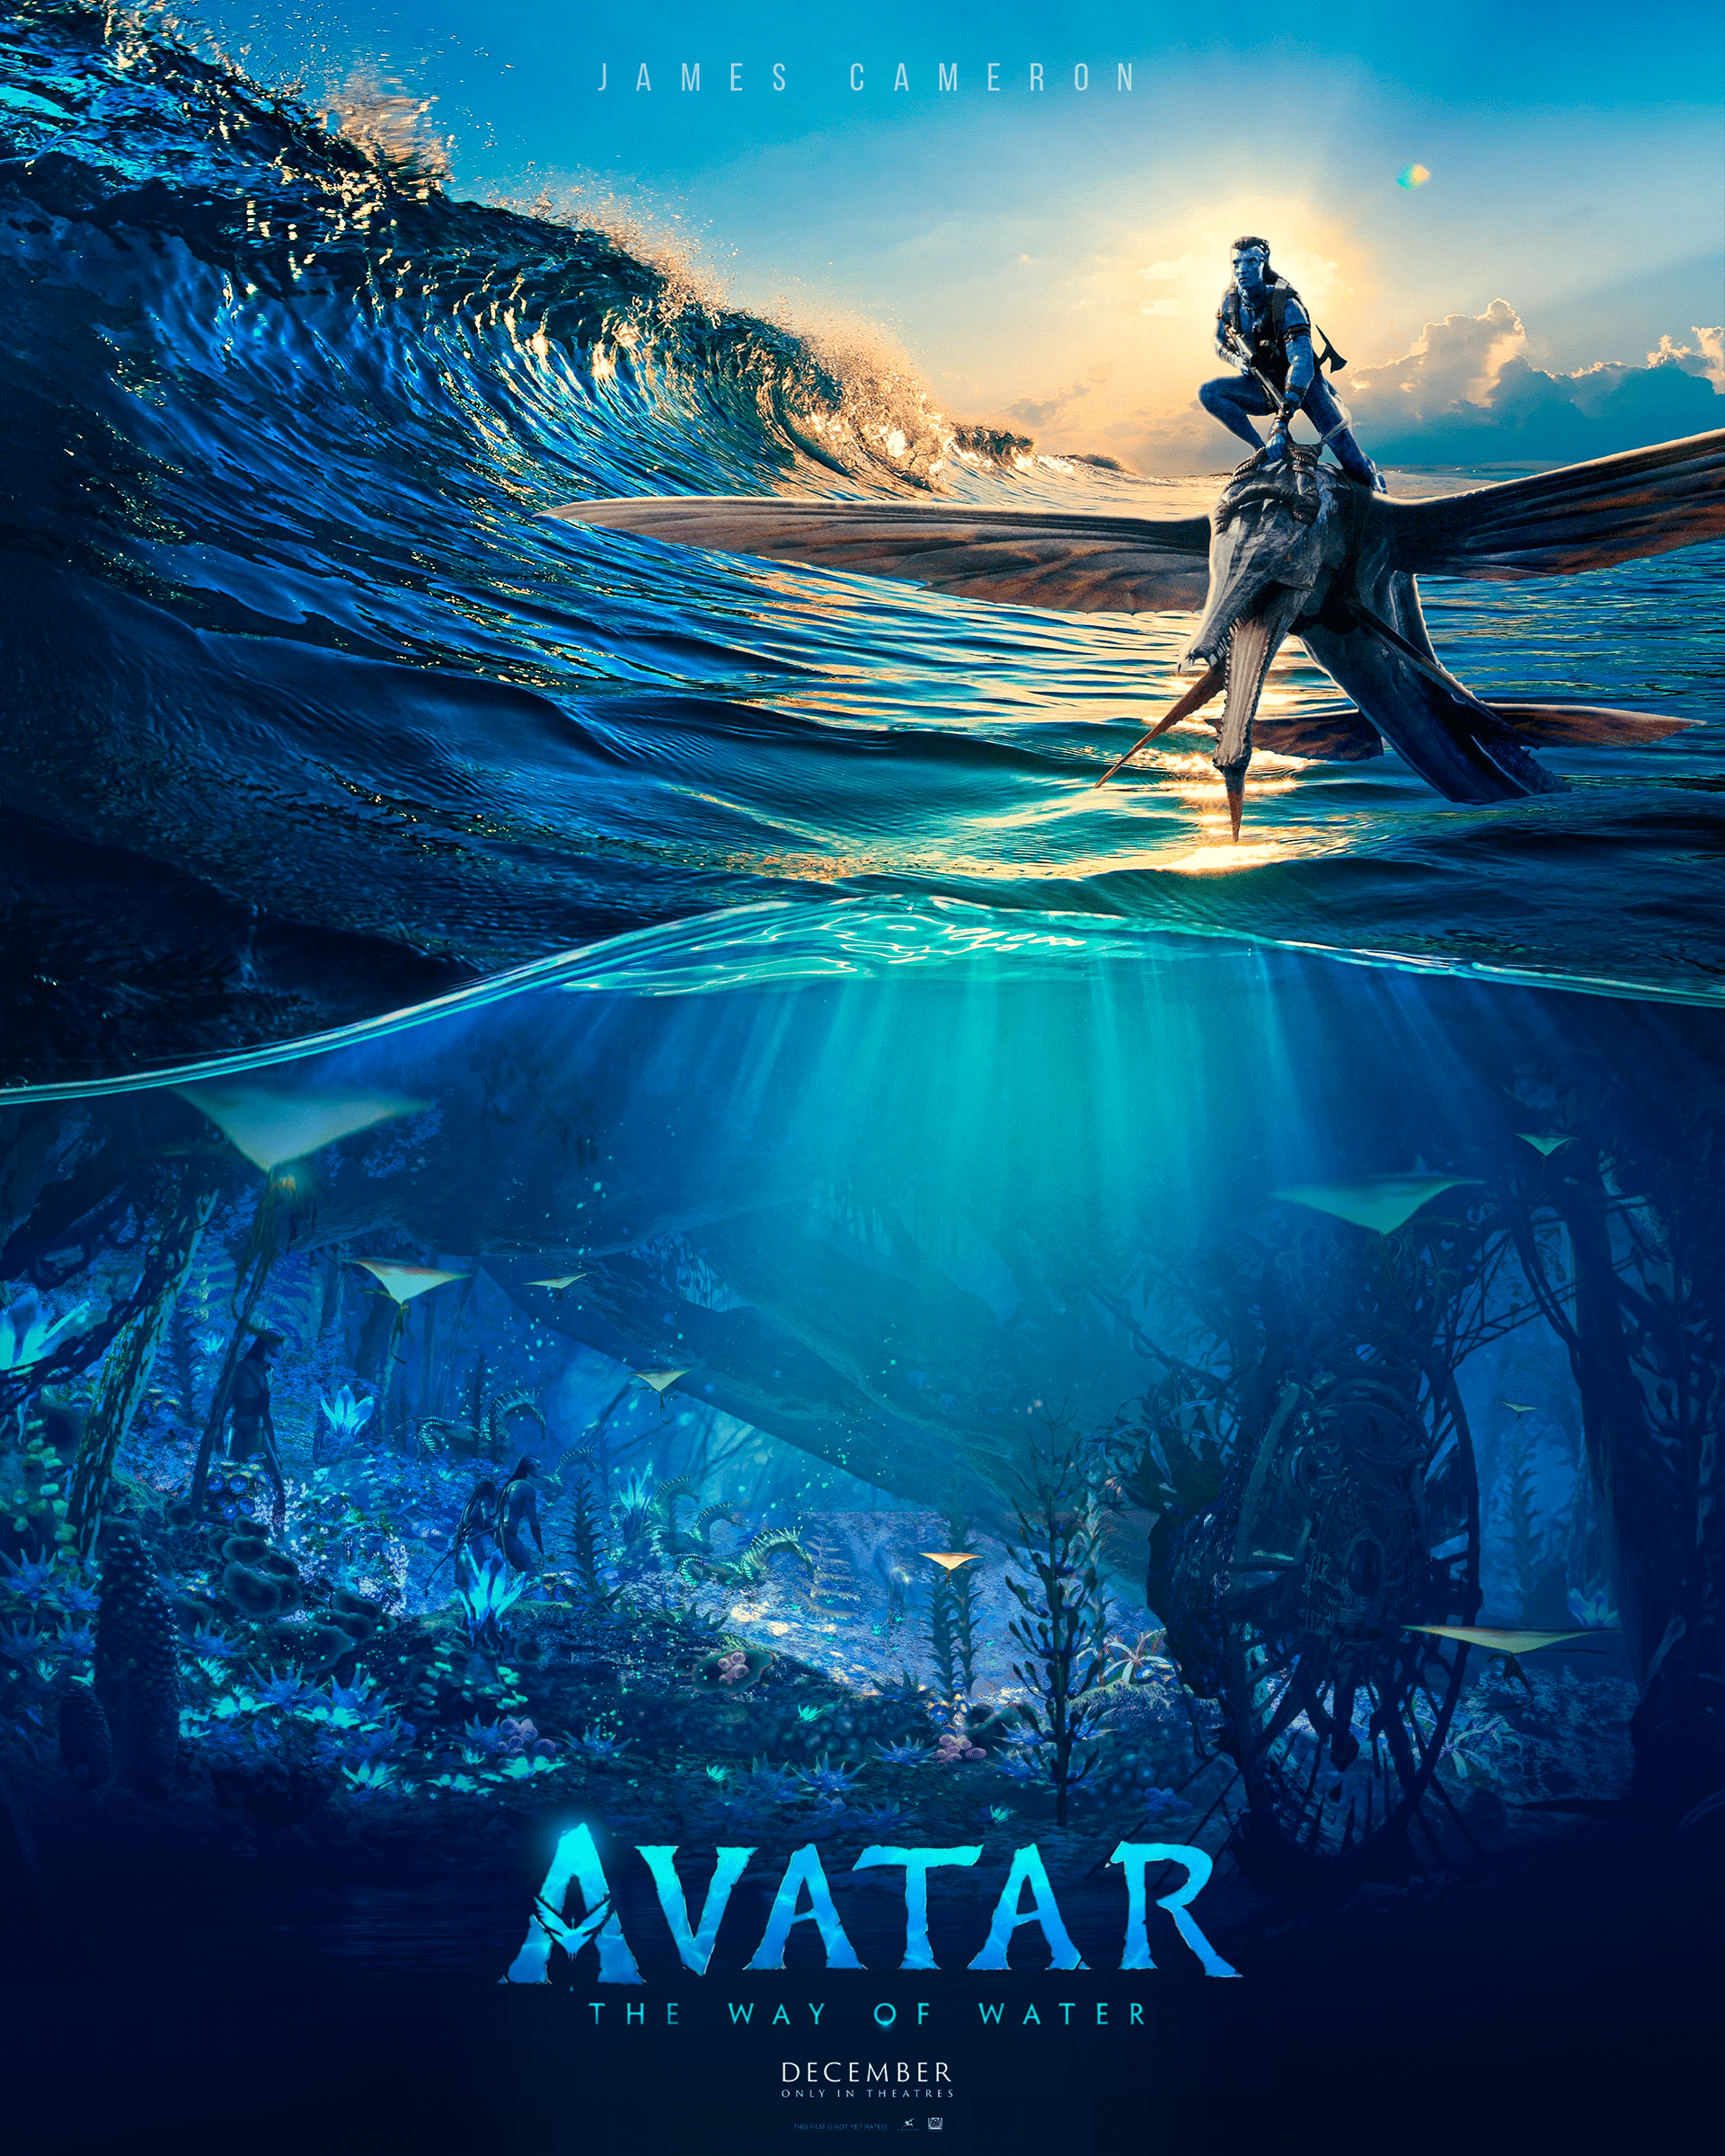 Download123𝘮ovies Avatar 2 The Way of Water 2022 FullMovie Free  MP4720p 1080p HD 4K English  Bulios